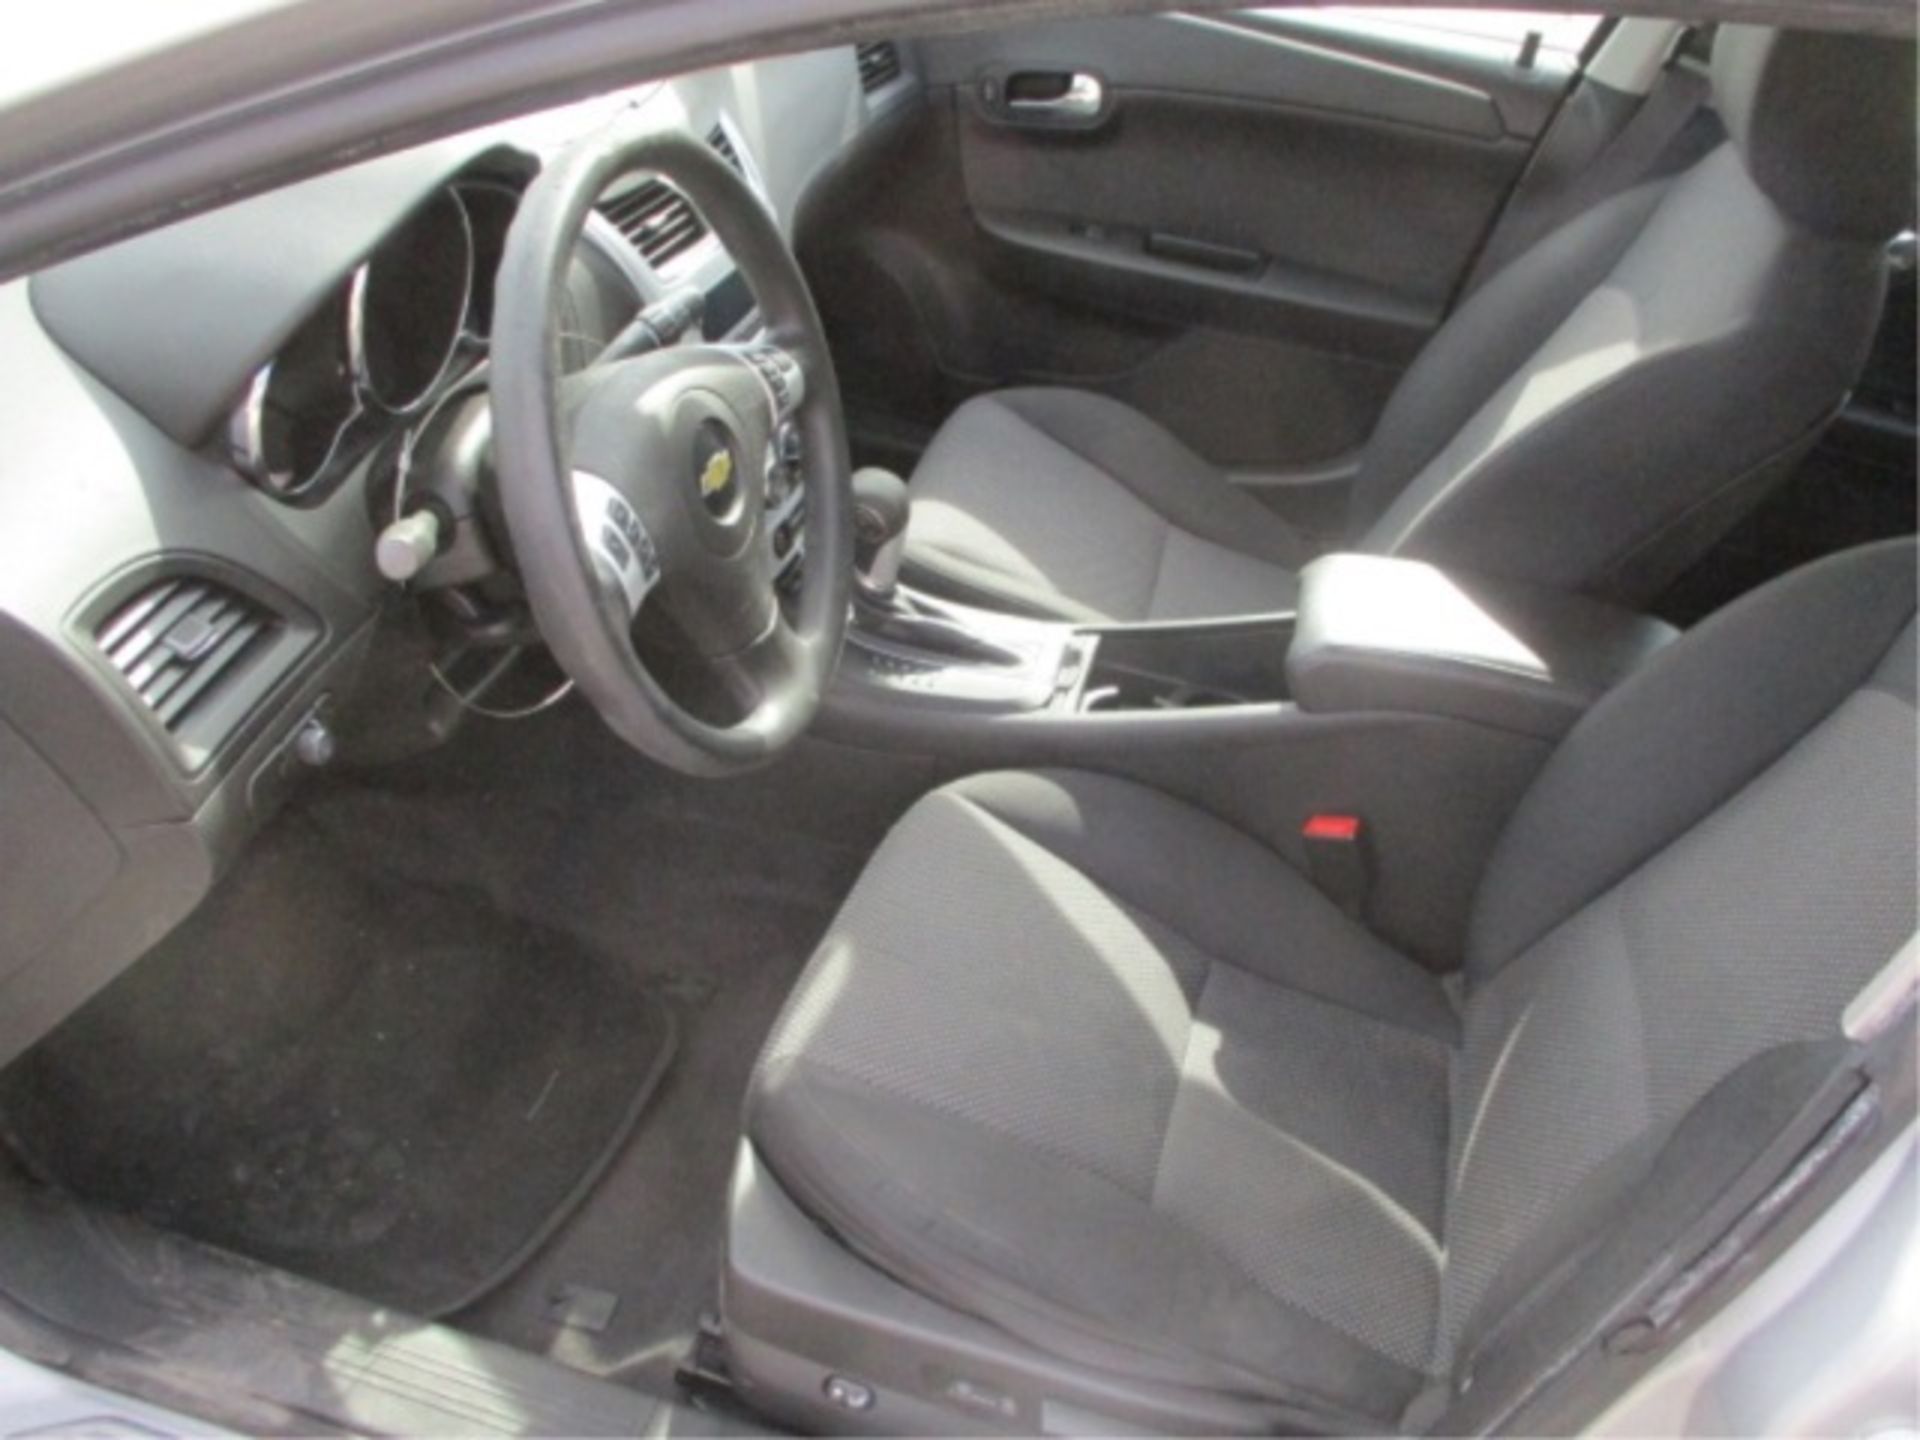 2012 Chevrolet Malibu Sedan, 2.4L Gas, Automatic, S/N: 1G1ZC5E05CF335186, Miles/Hours - 106478 - Image 9 of 16